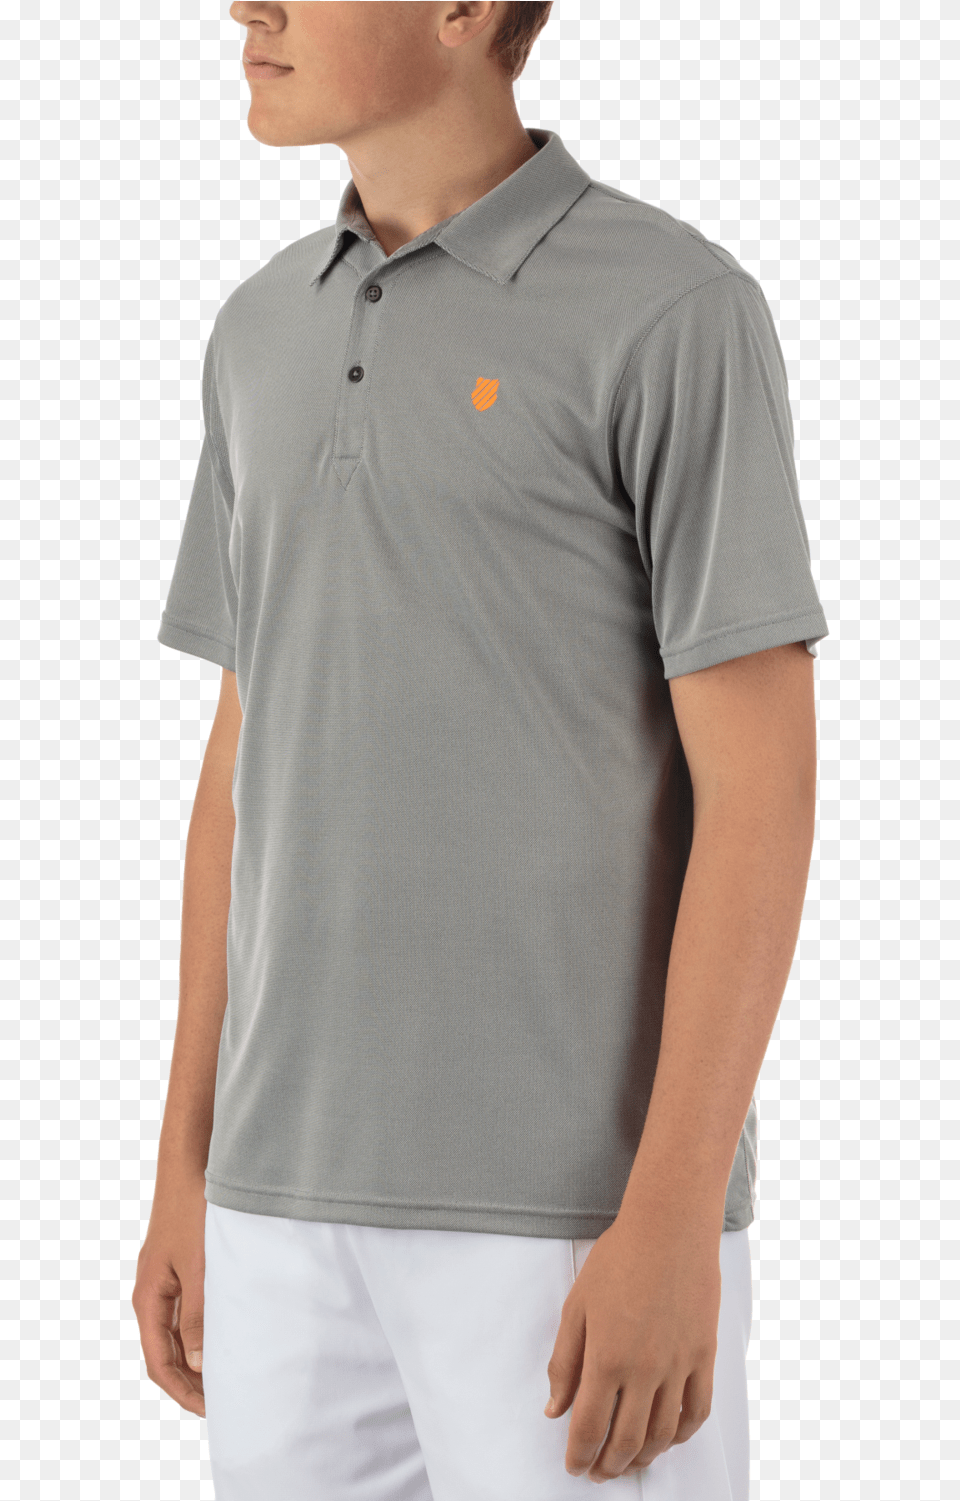 087 Polo Shirt, Clothing, T-shirt, Face, Head Png Image